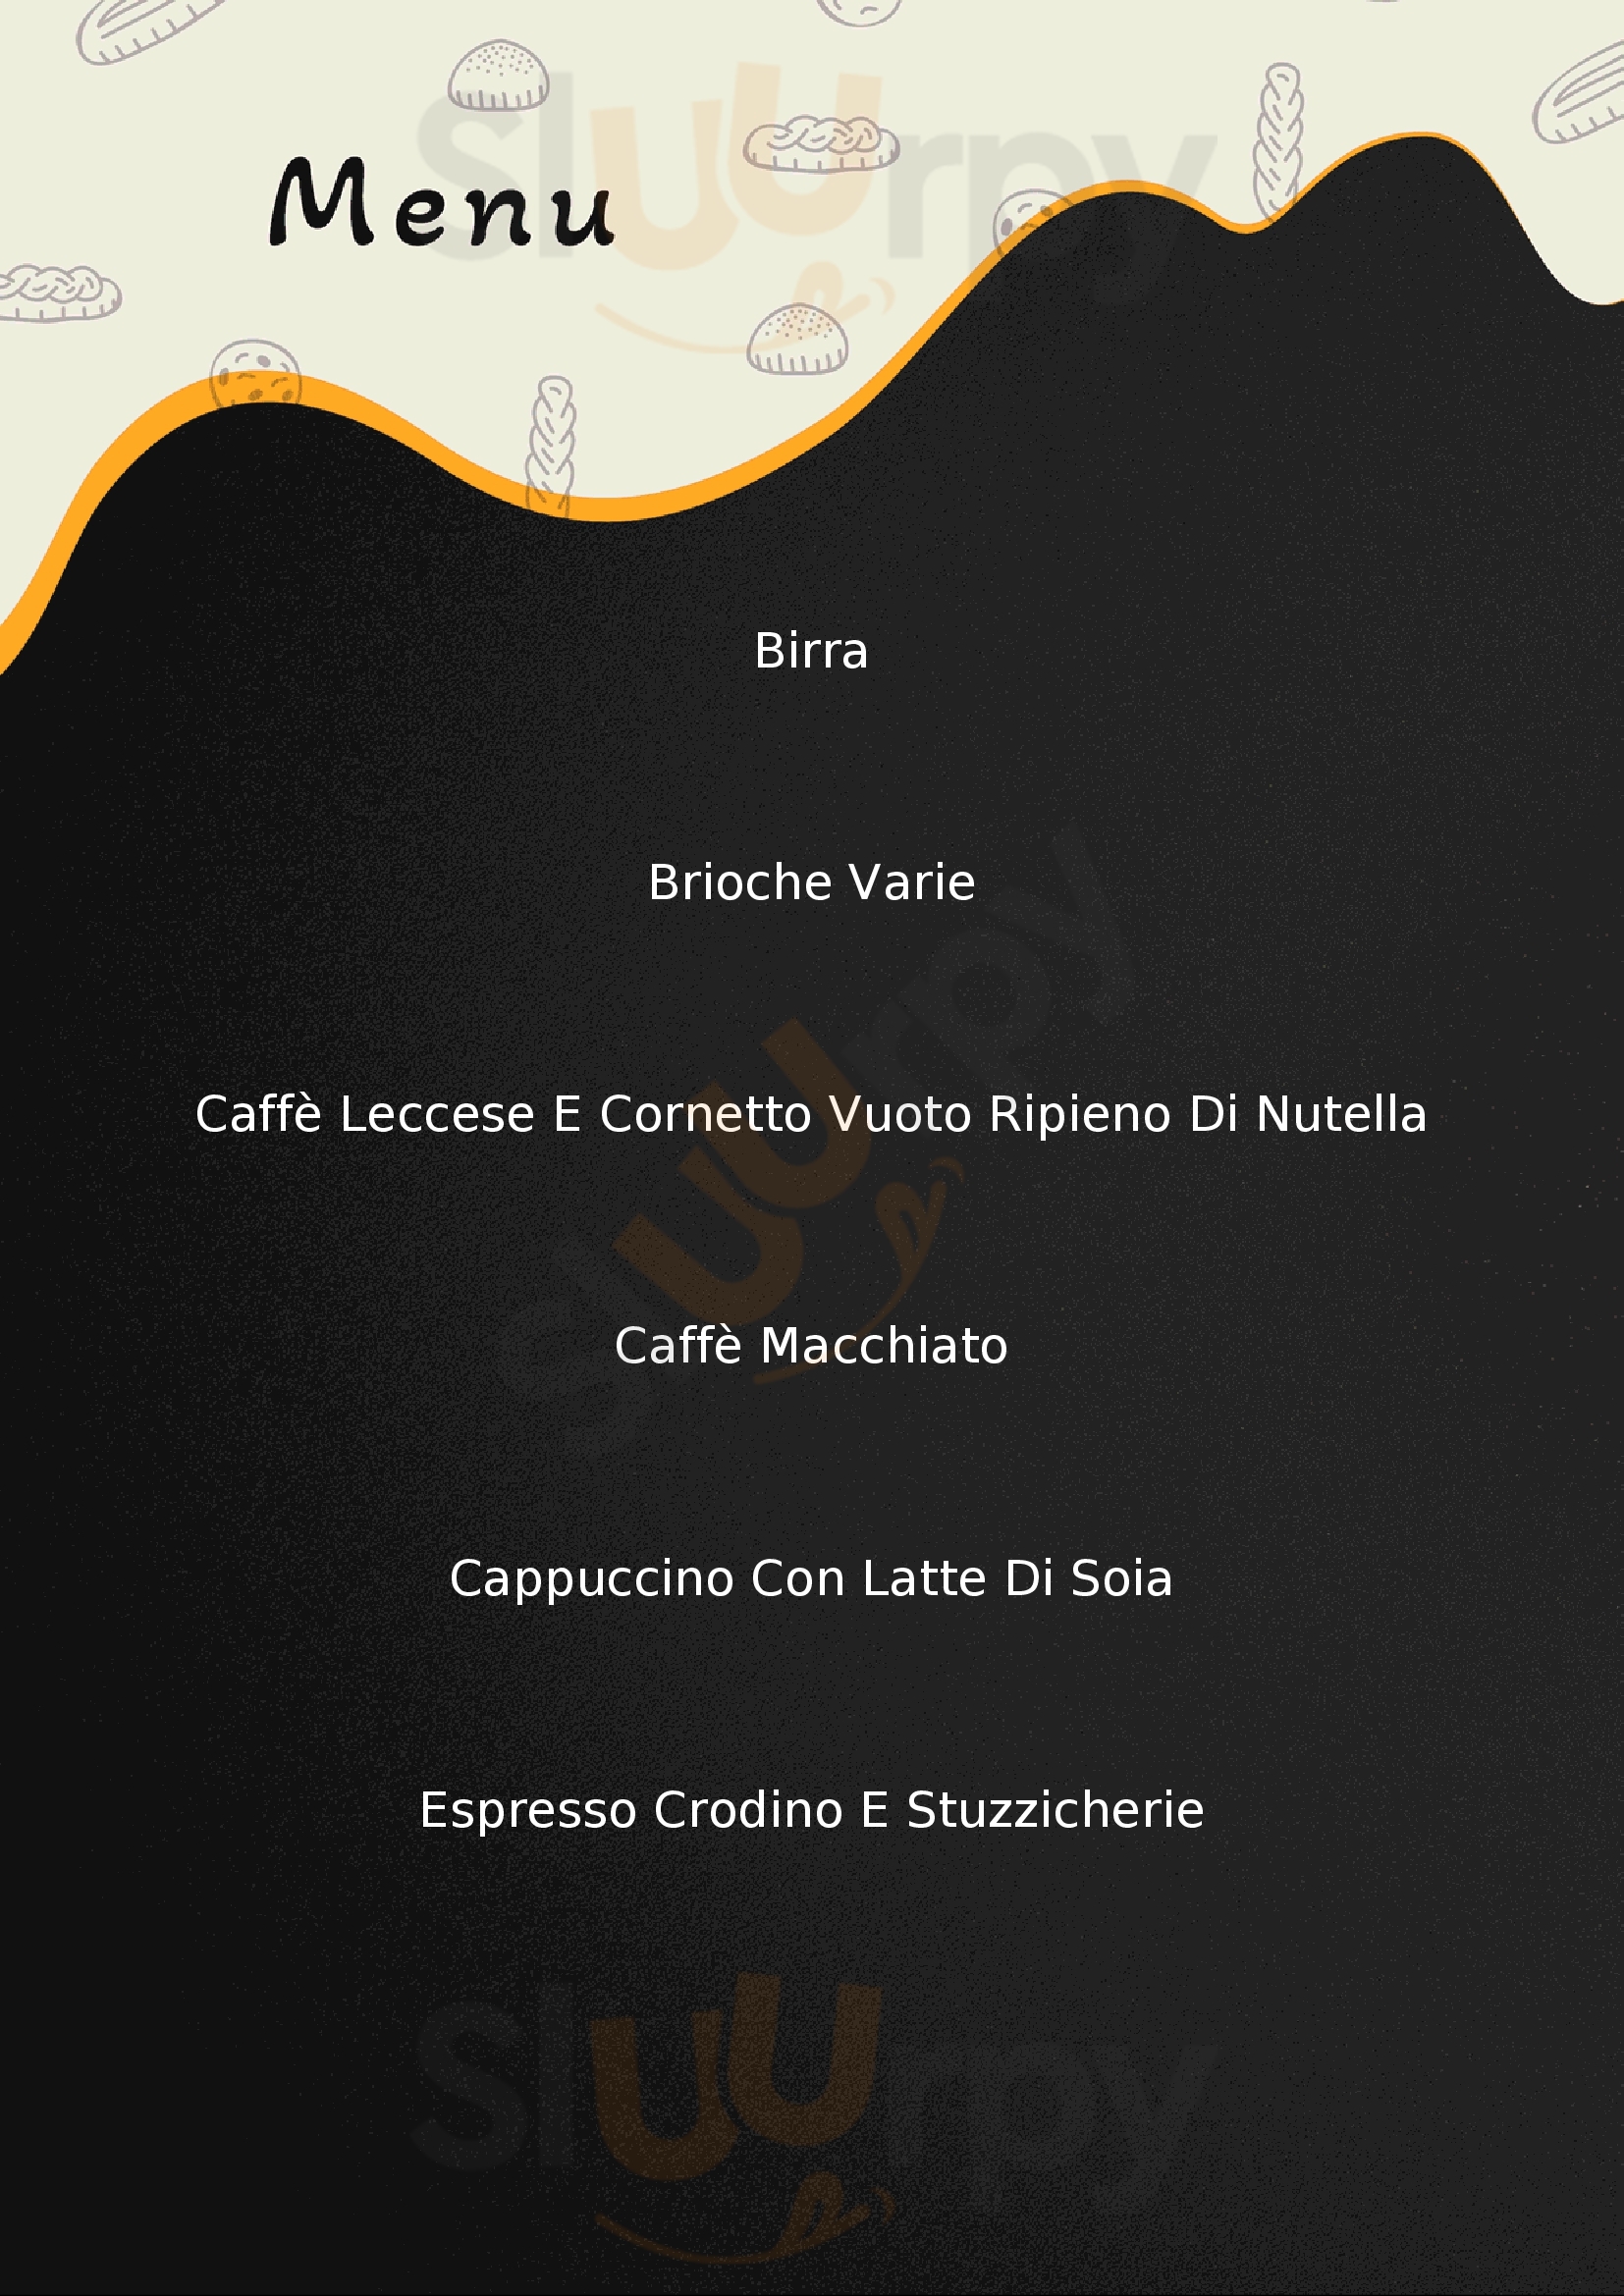 En Plo Cafe Santa Cesarea Terme menù 1 pagina